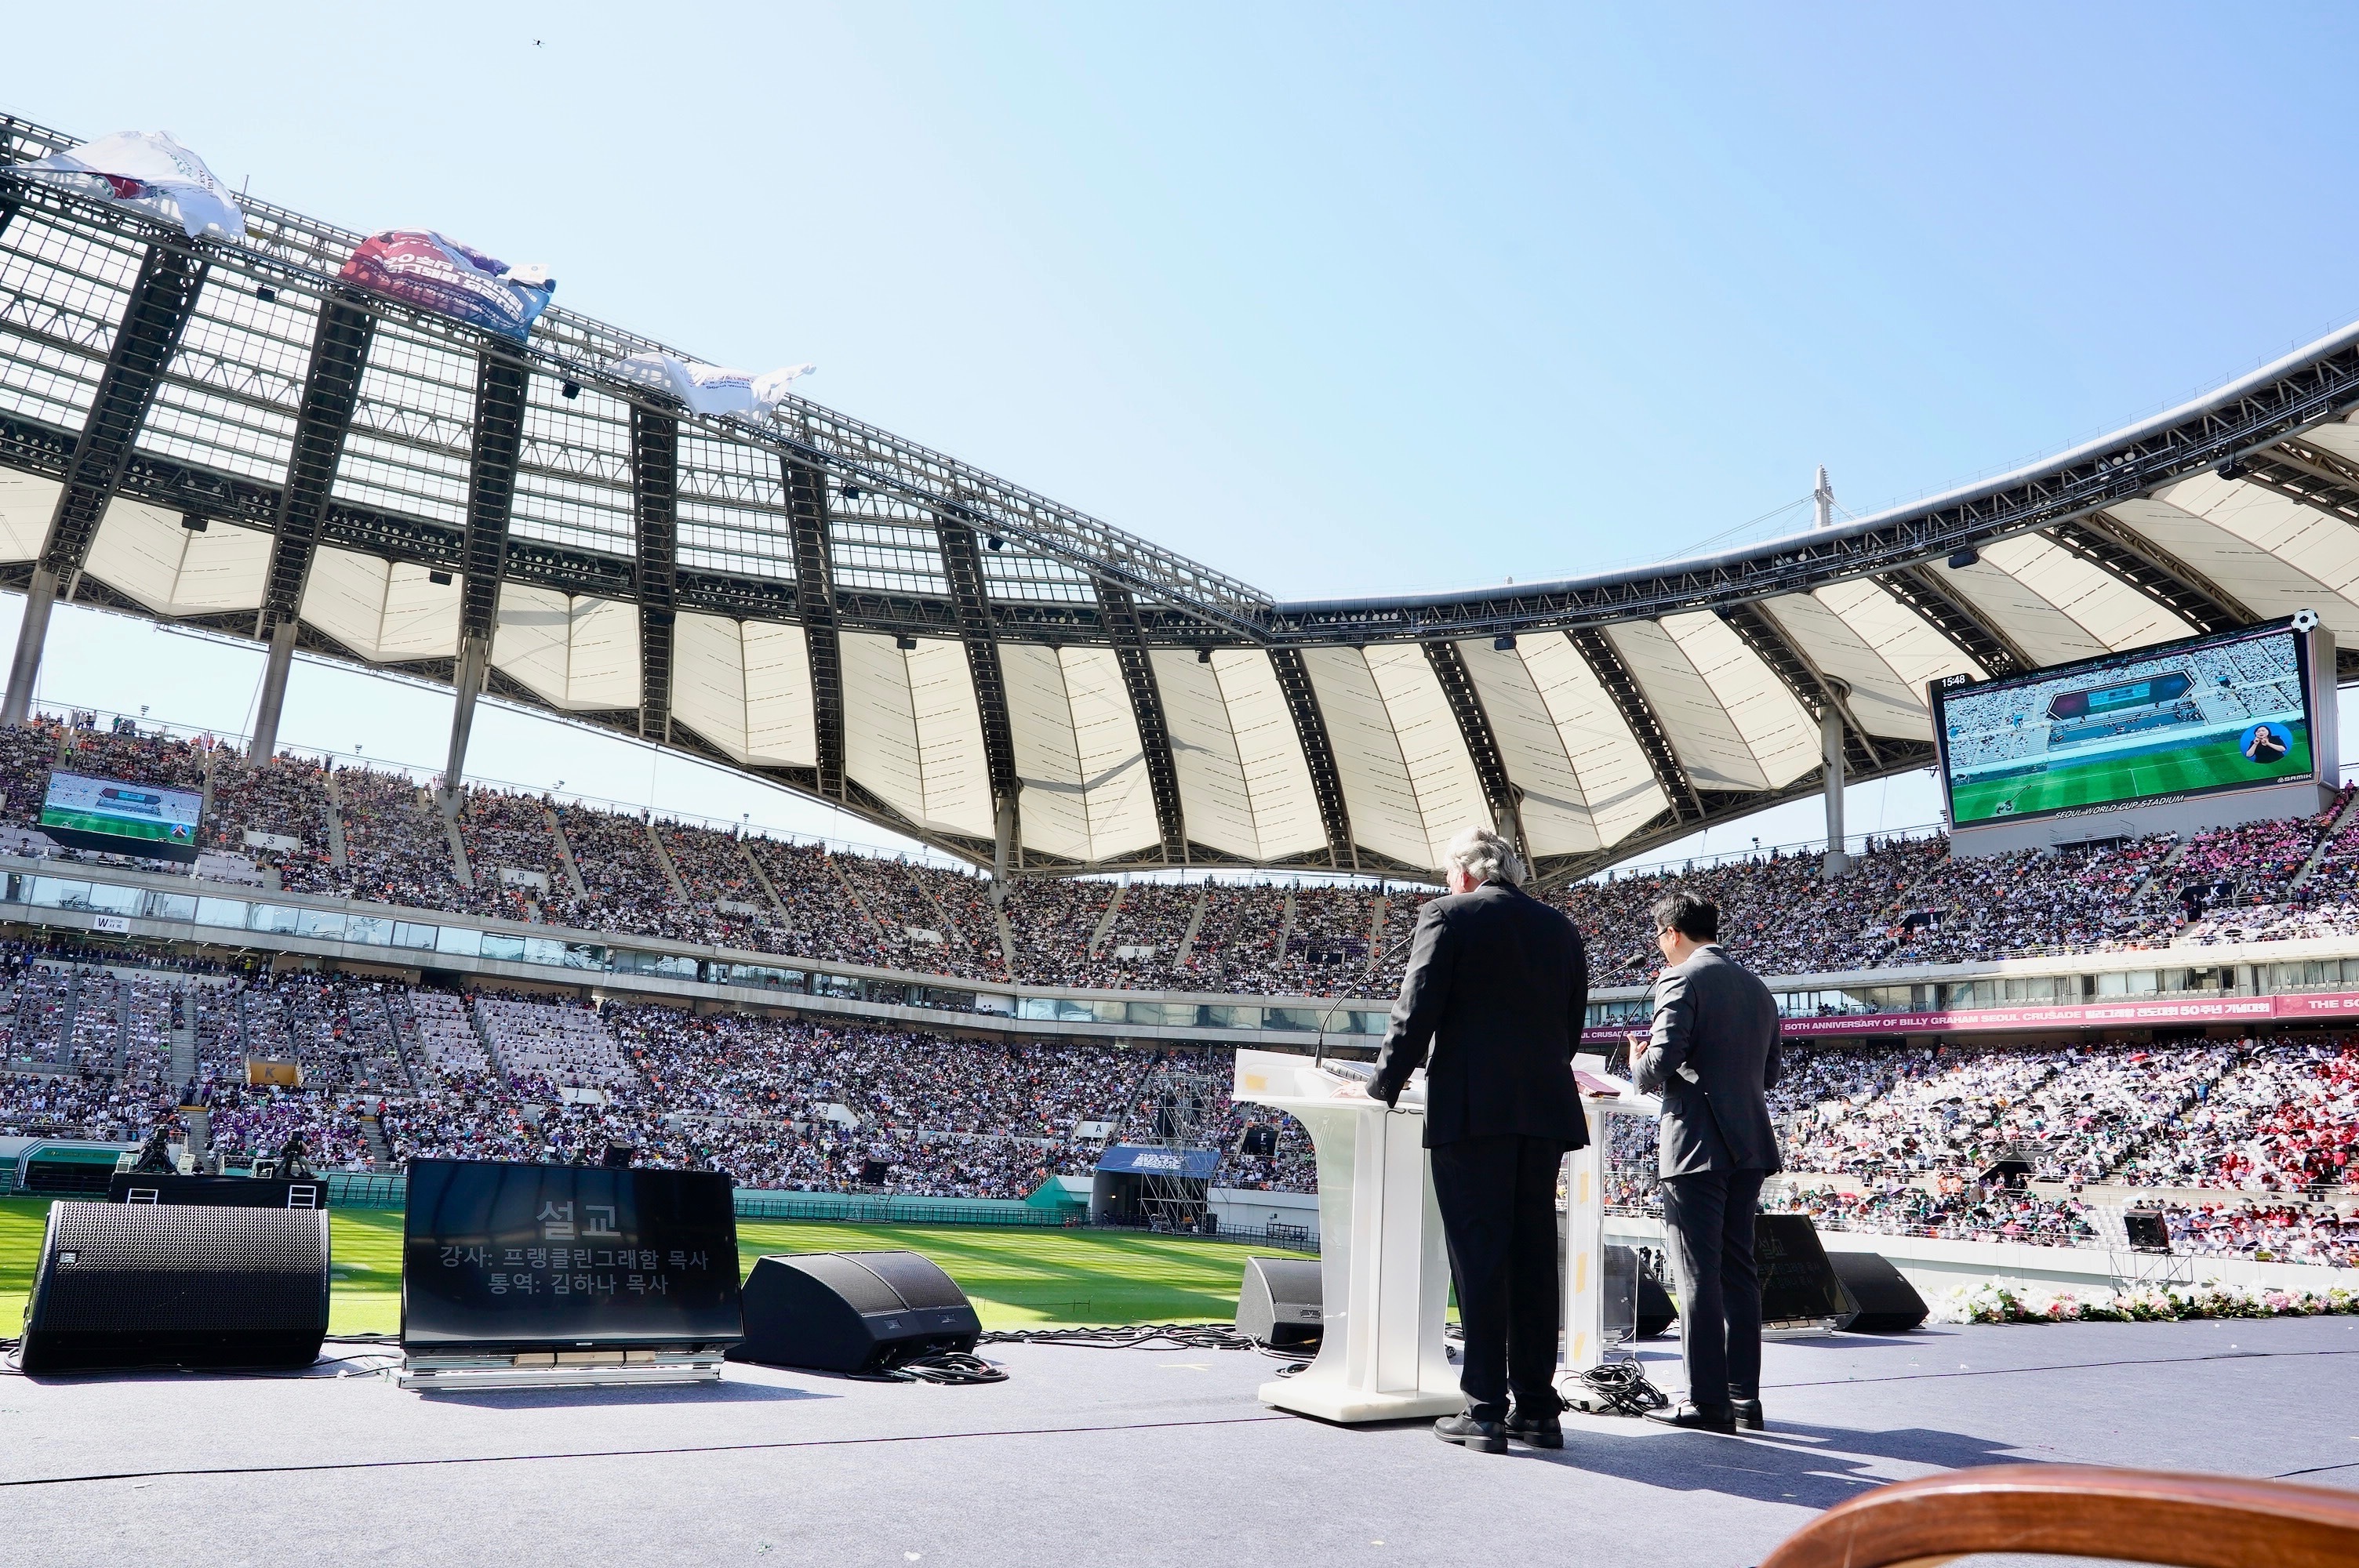 Seoul stadium overflows for 50th anniversary of Billy Graham's historic Korea crusade